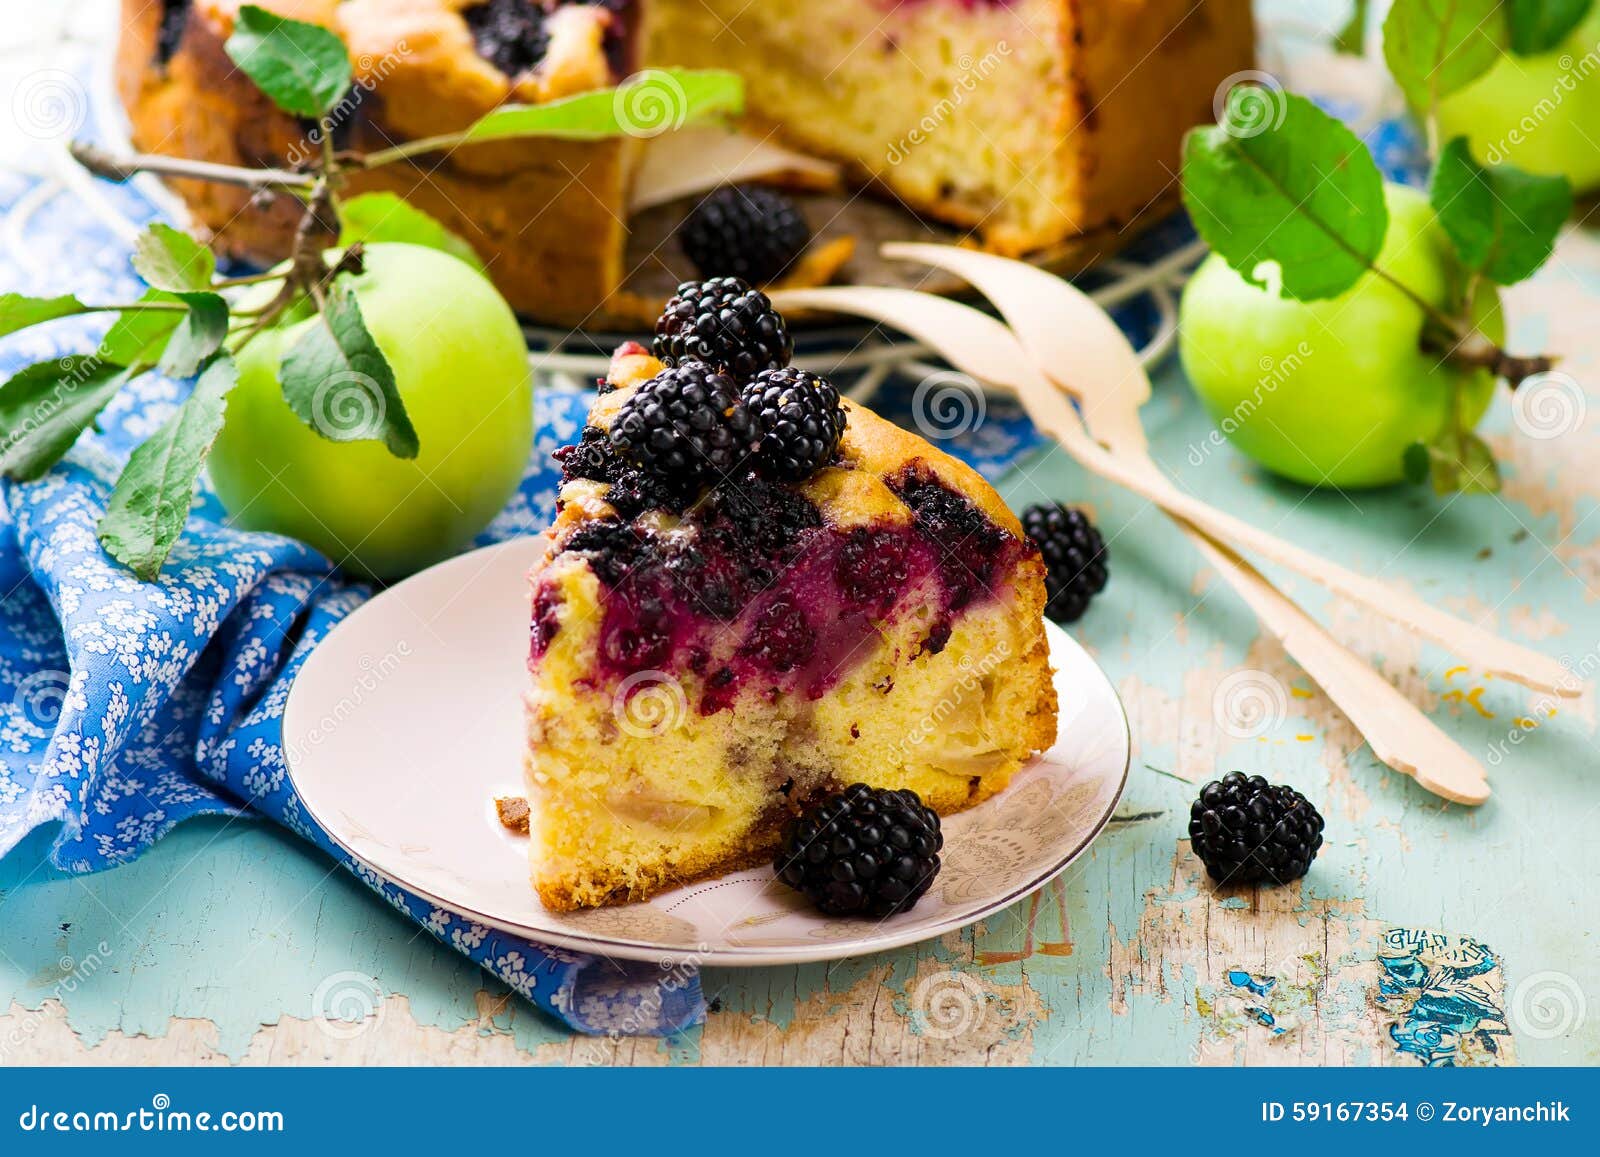 Blackberry and apples pie stock photo. Image of tasty - 59167354